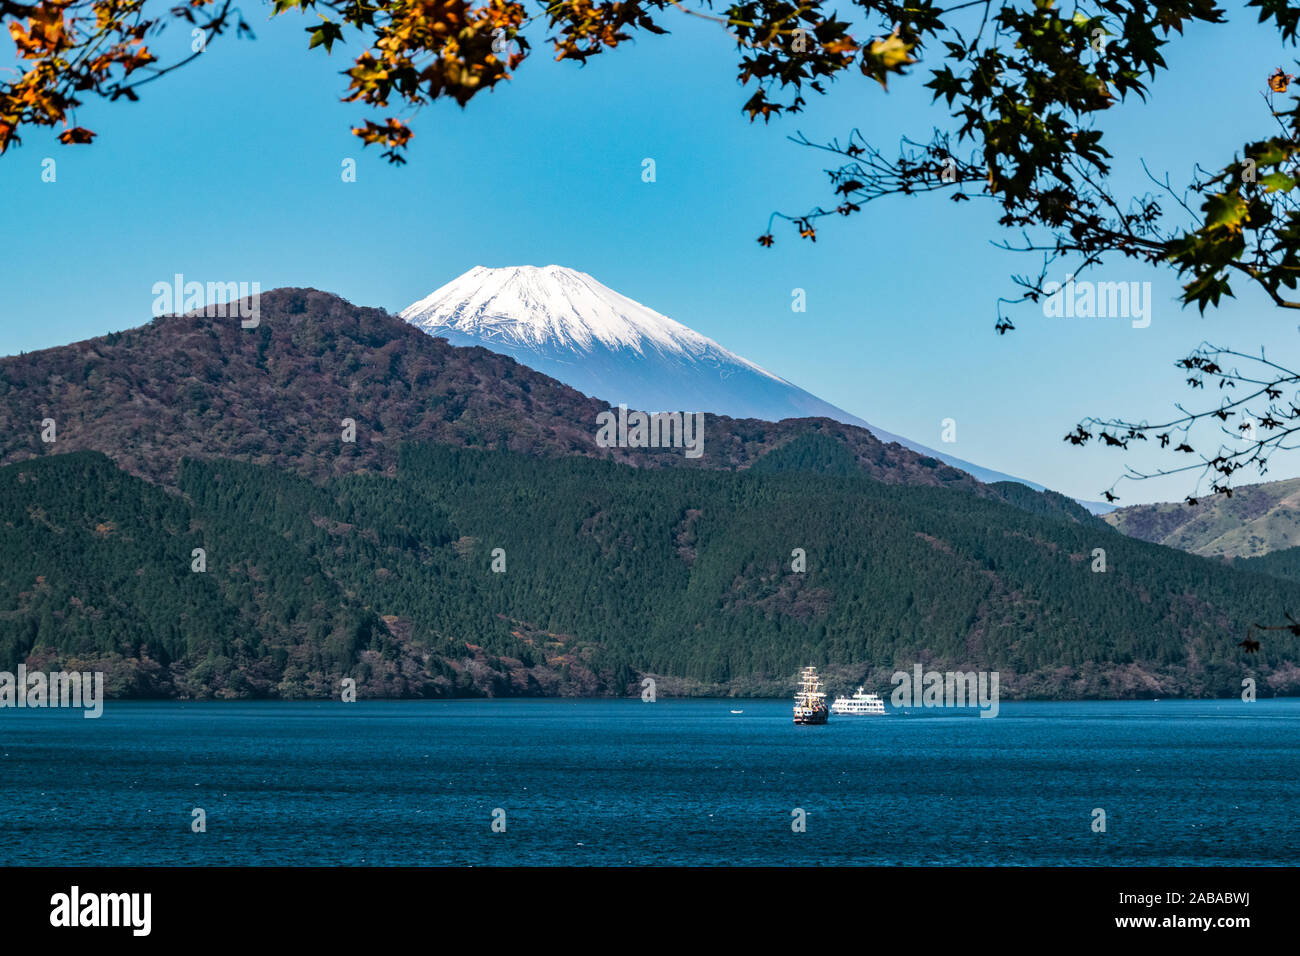 Mt. Fuji seen from Lake Ashinoko with two tourist cruise boats, shot through autumn foliage. Stock Photo